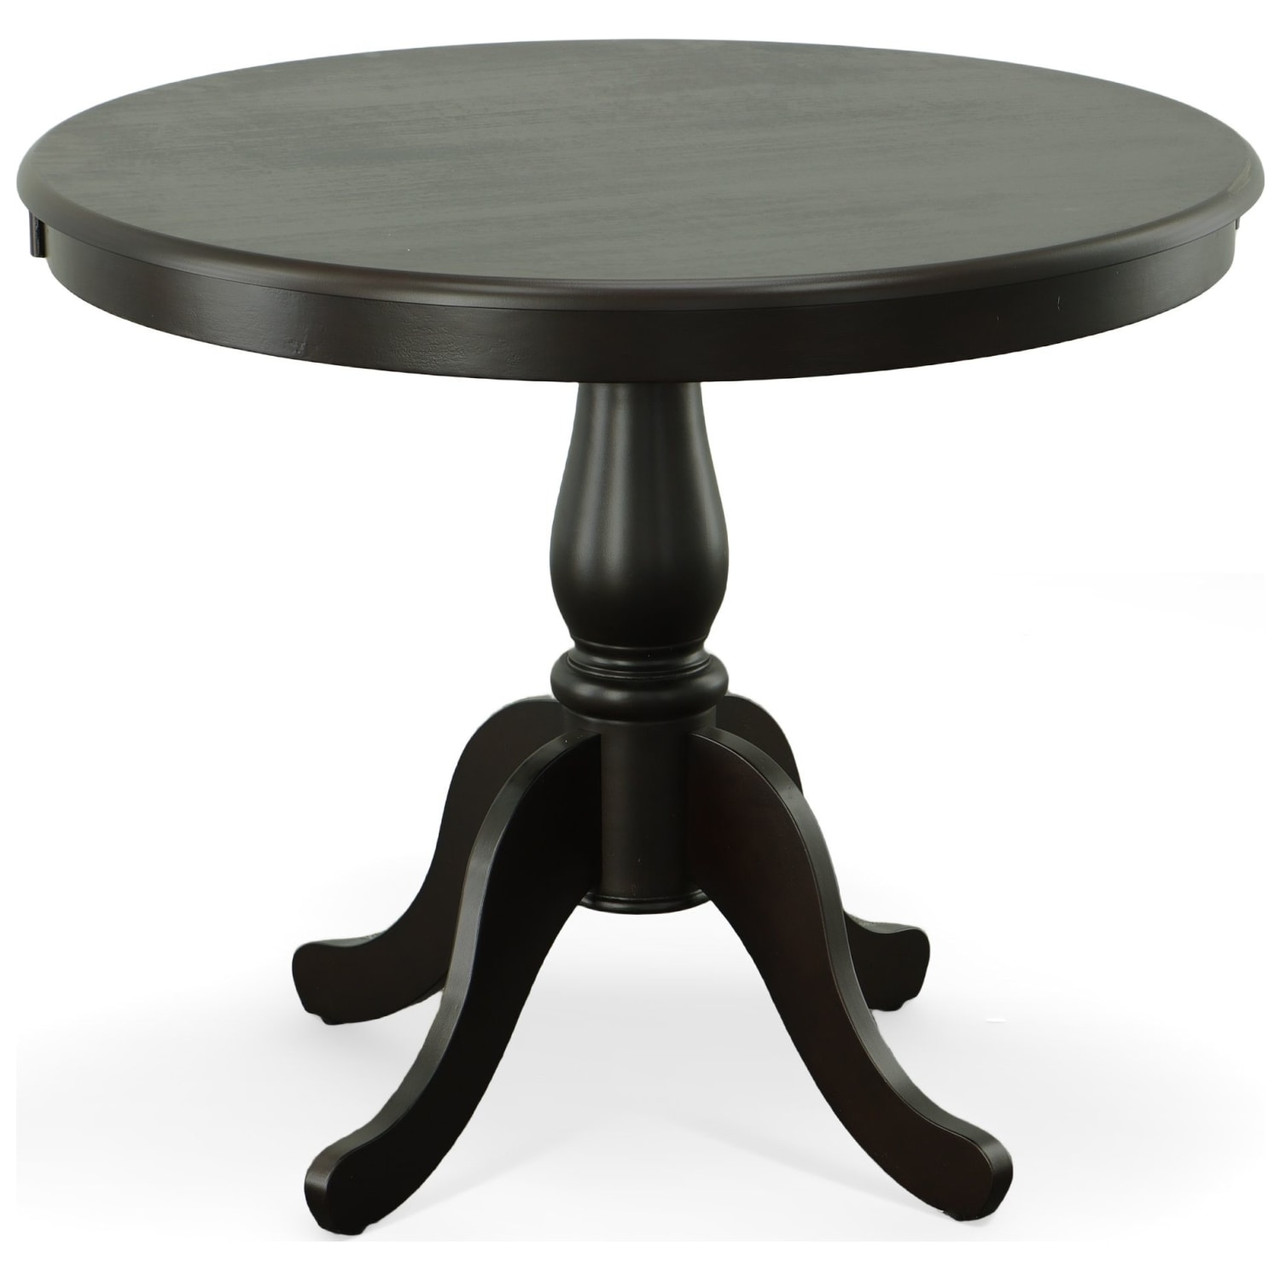 Fairview 36” Round Pedestal Dining Table, Espresso